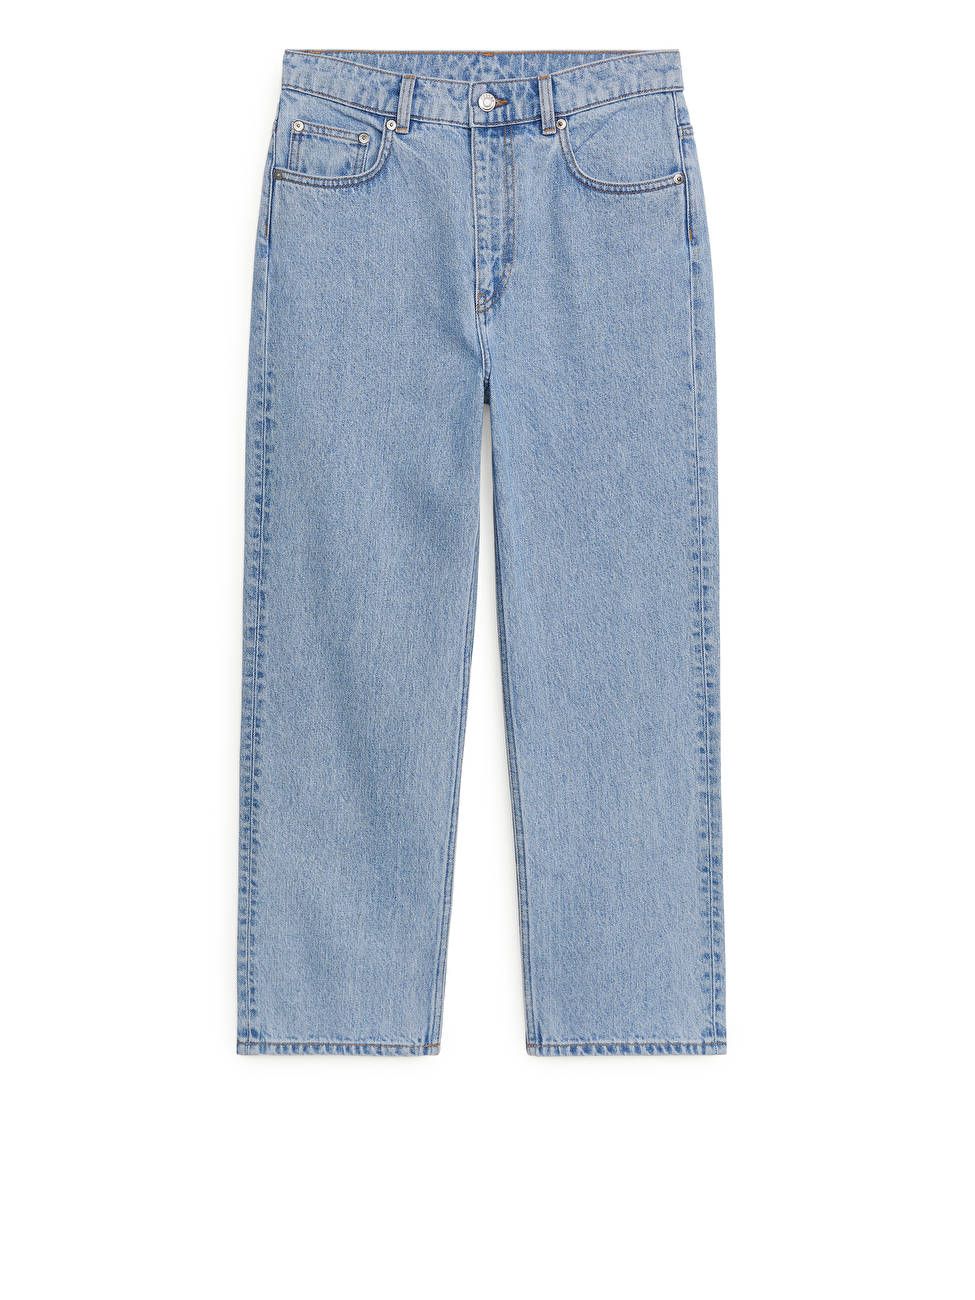 GERADE, kurz geschnittene Jeans | ARKET (EU)